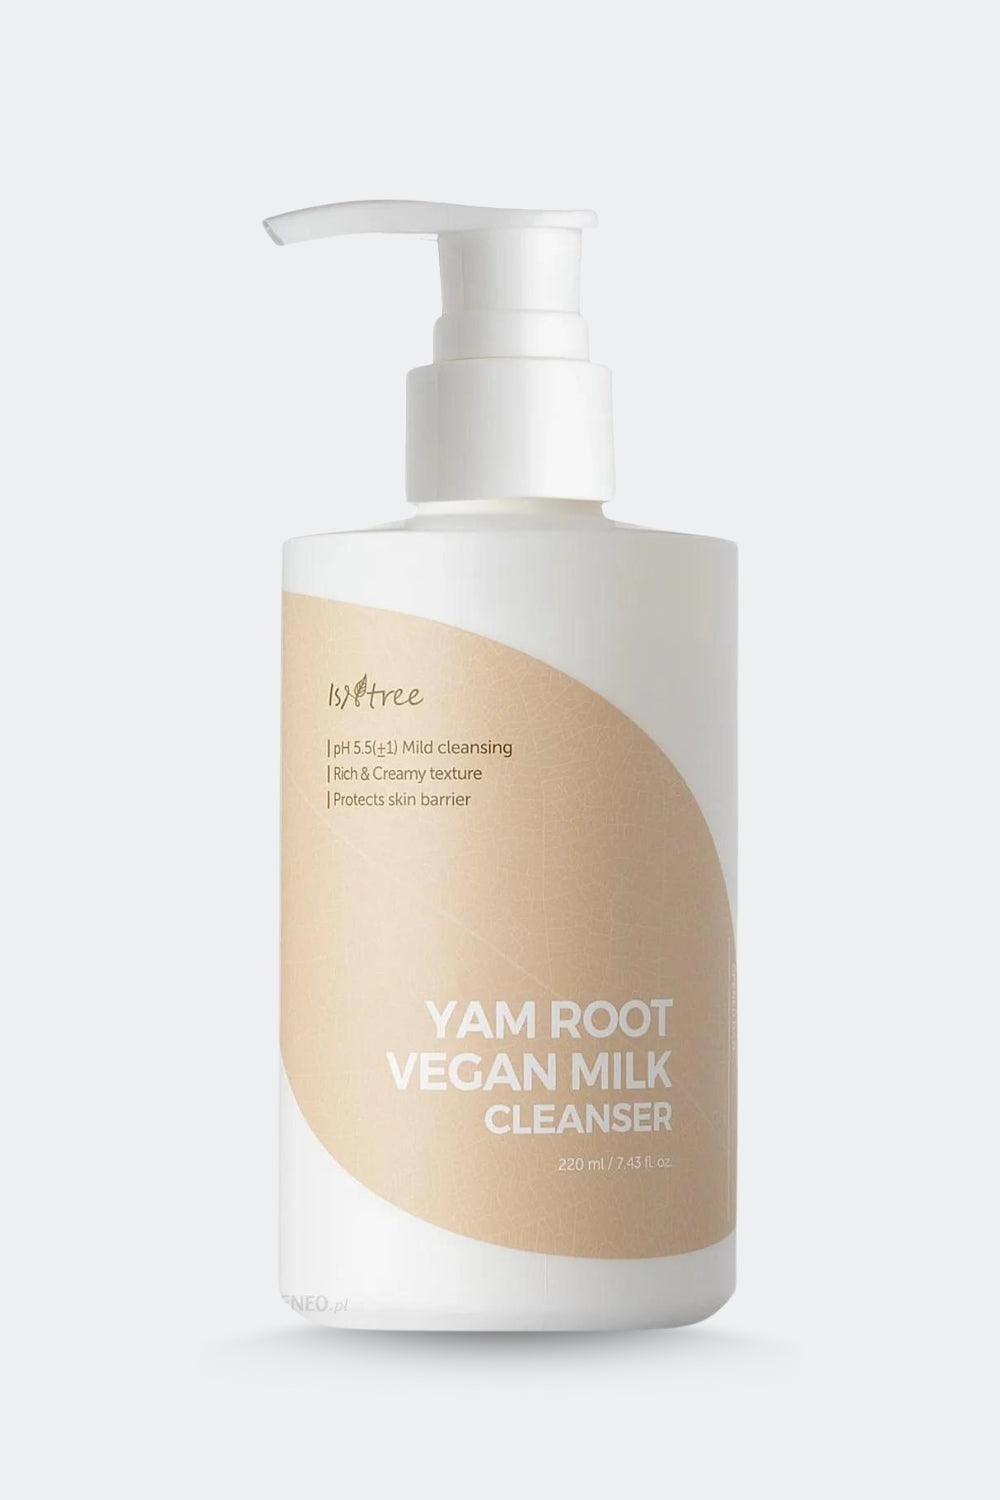 ISNTREE - Yam Root Vegan Milk Cleanser - 220ml